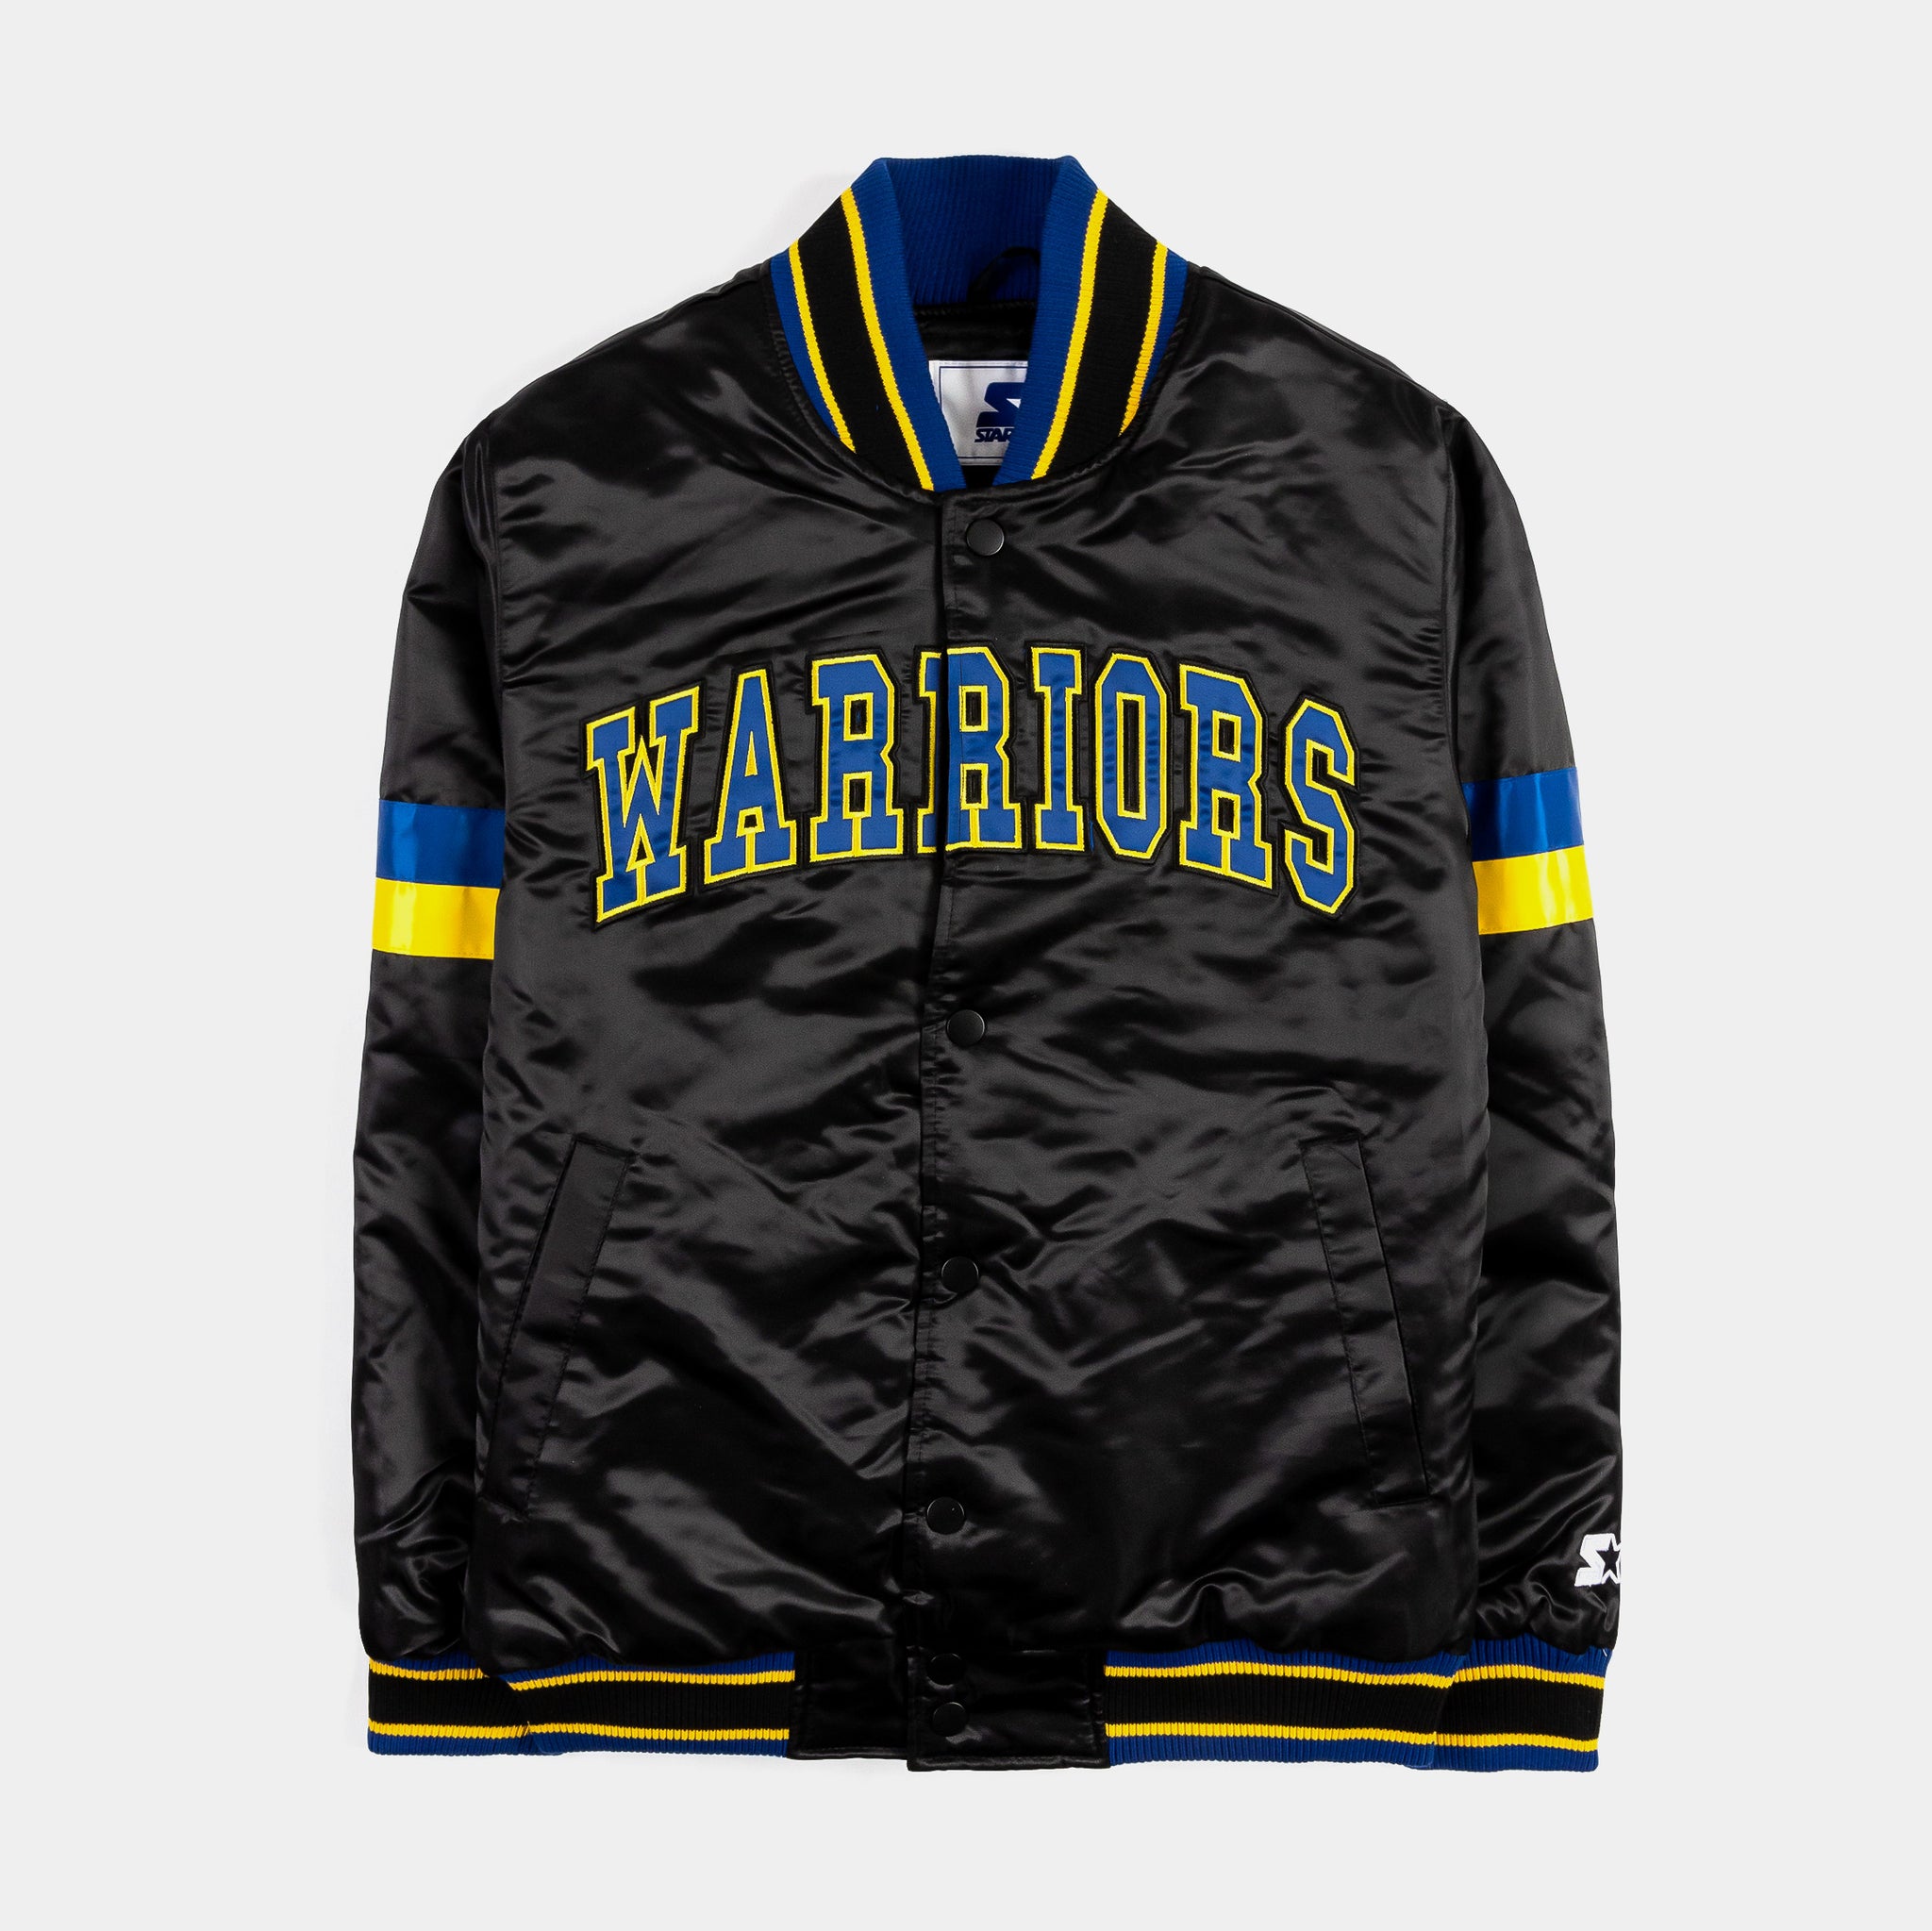 Golden State Warriors Starter Jacket